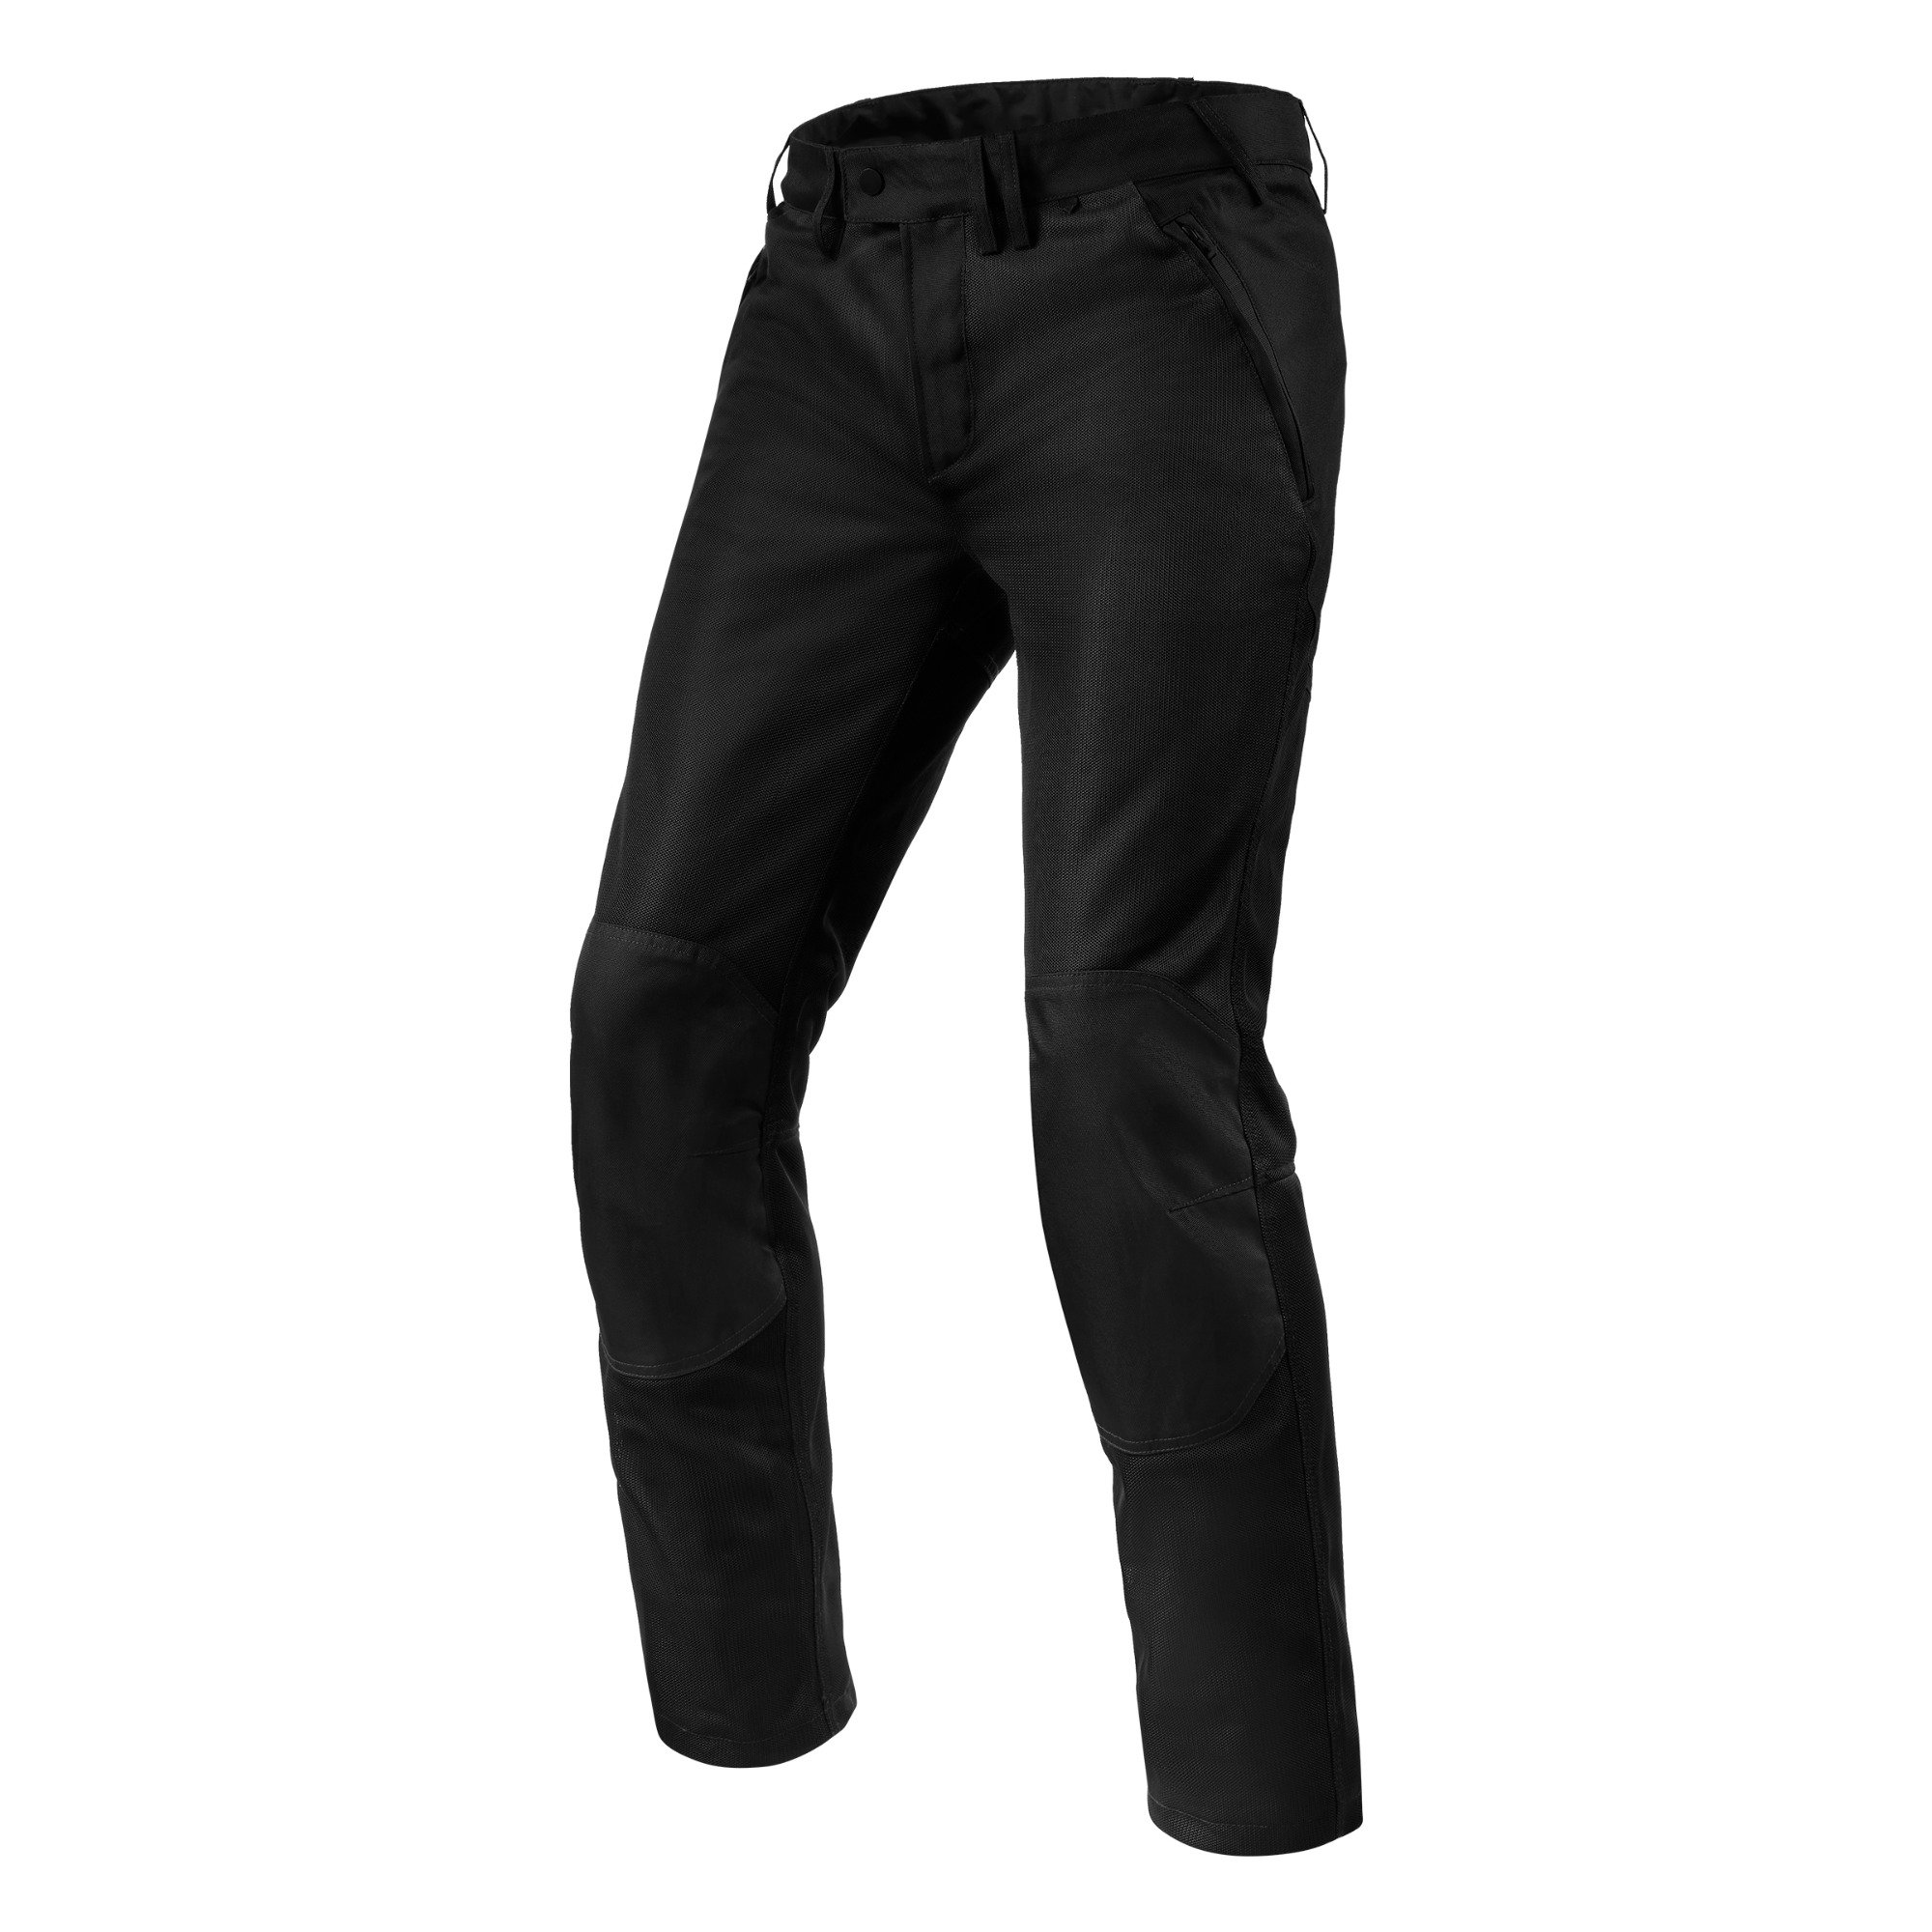 Image of REV'IT! Pants Eclipse 2 Black Long Motorcycle Pants Talla S